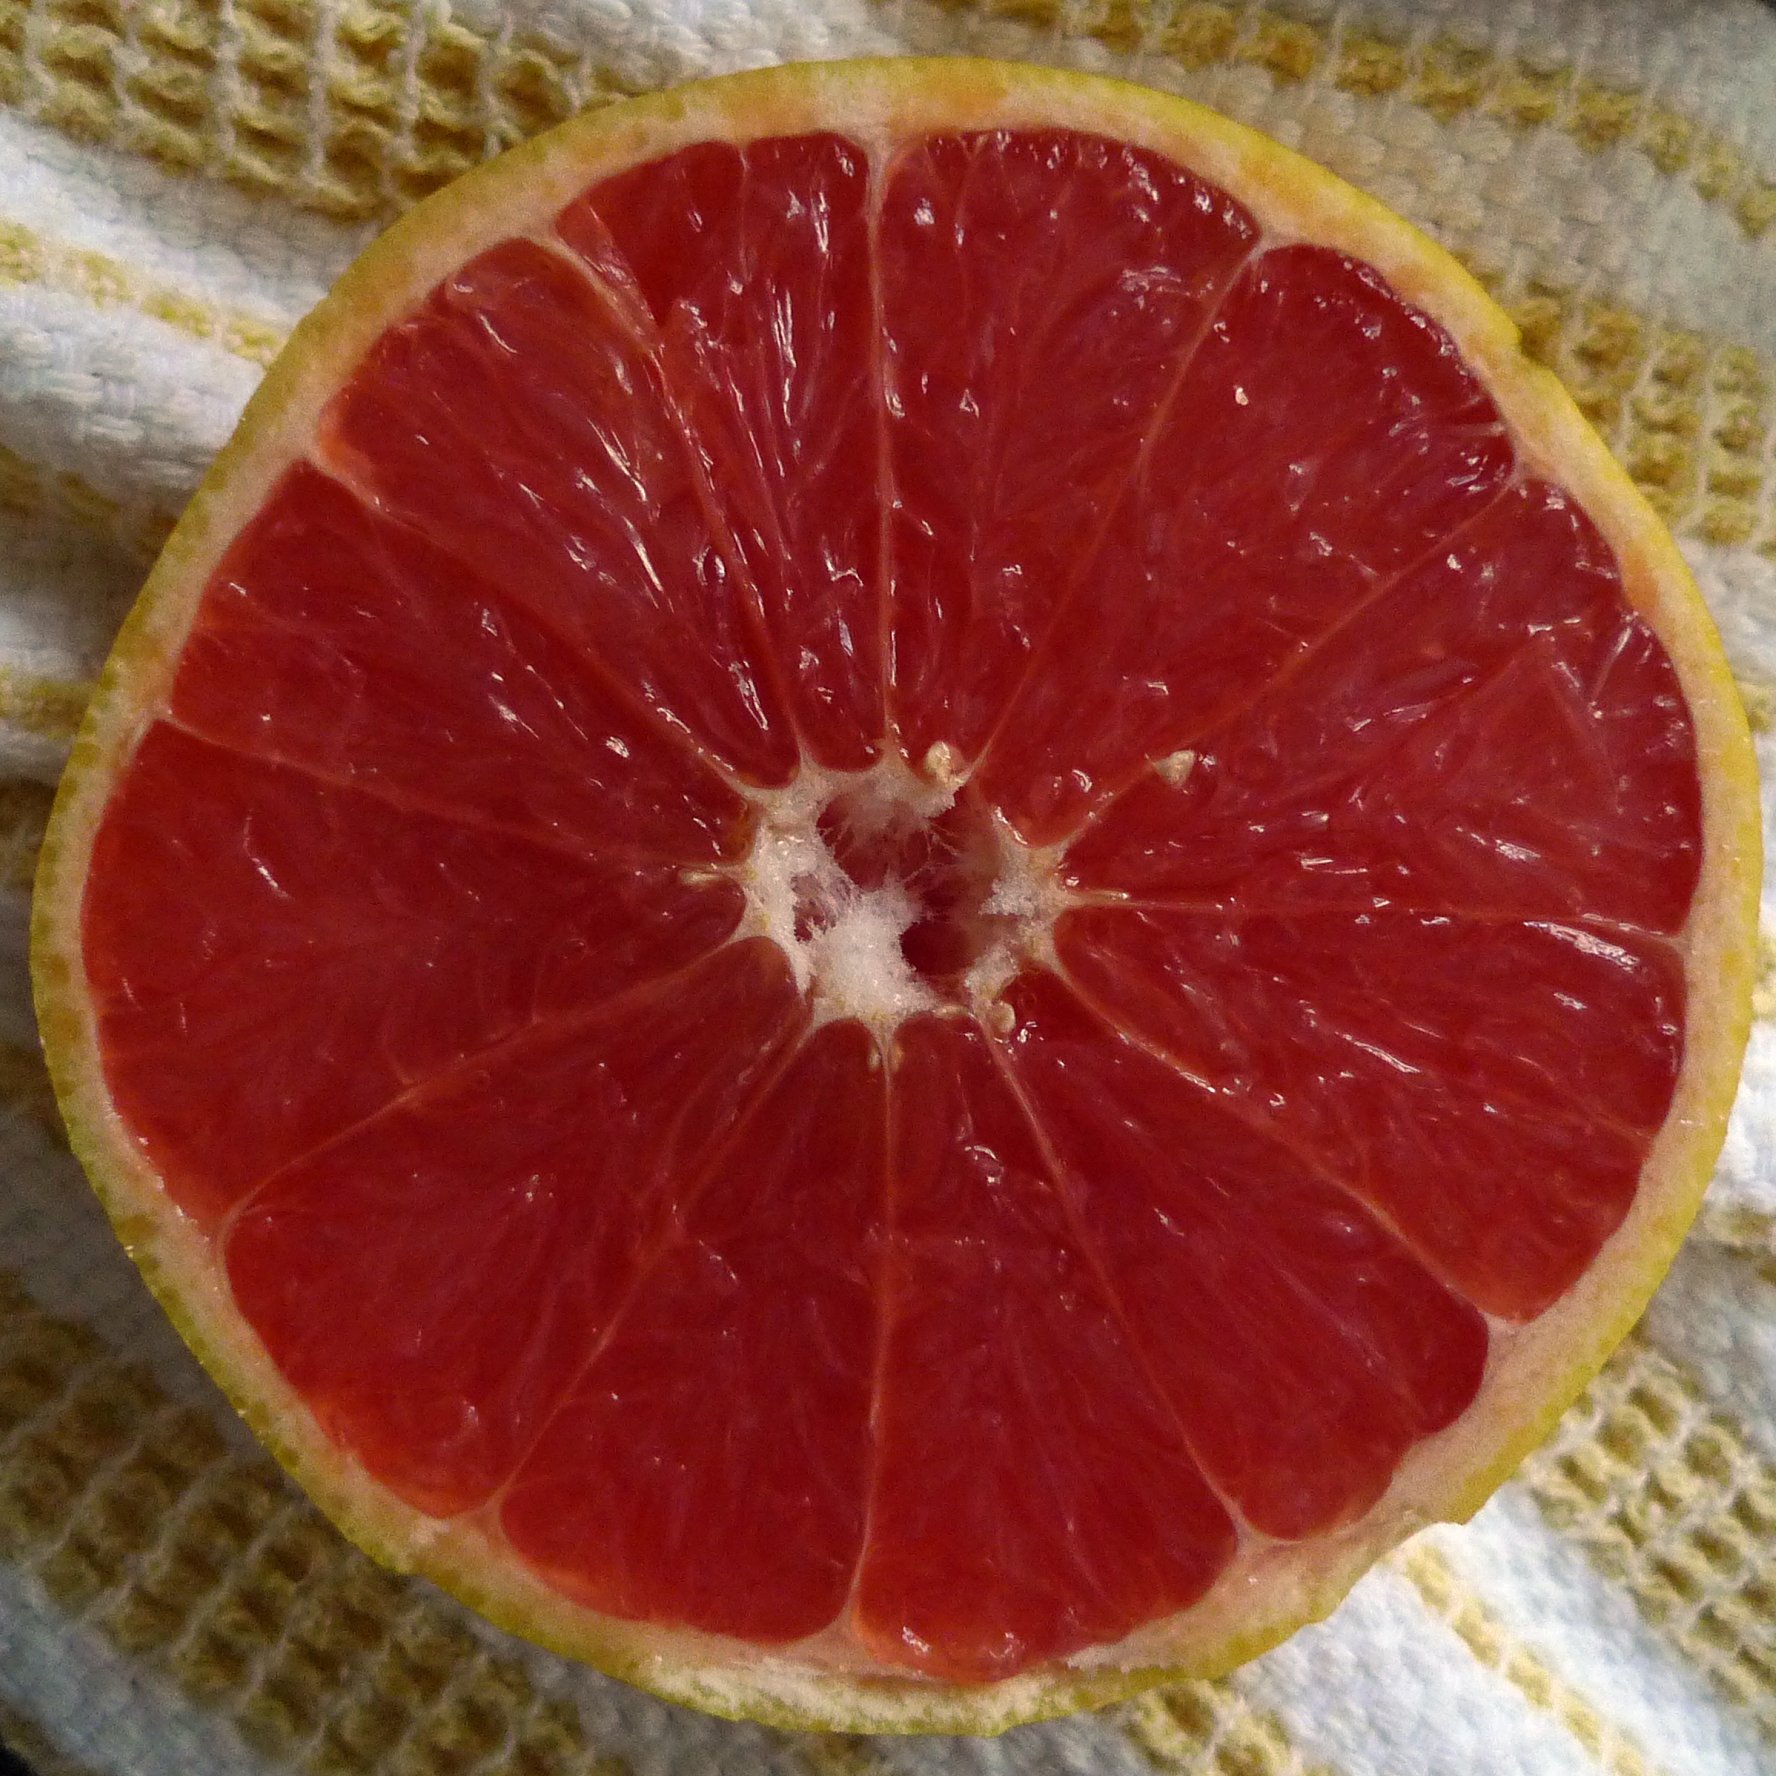 a  orange cut in half on a yellow towel